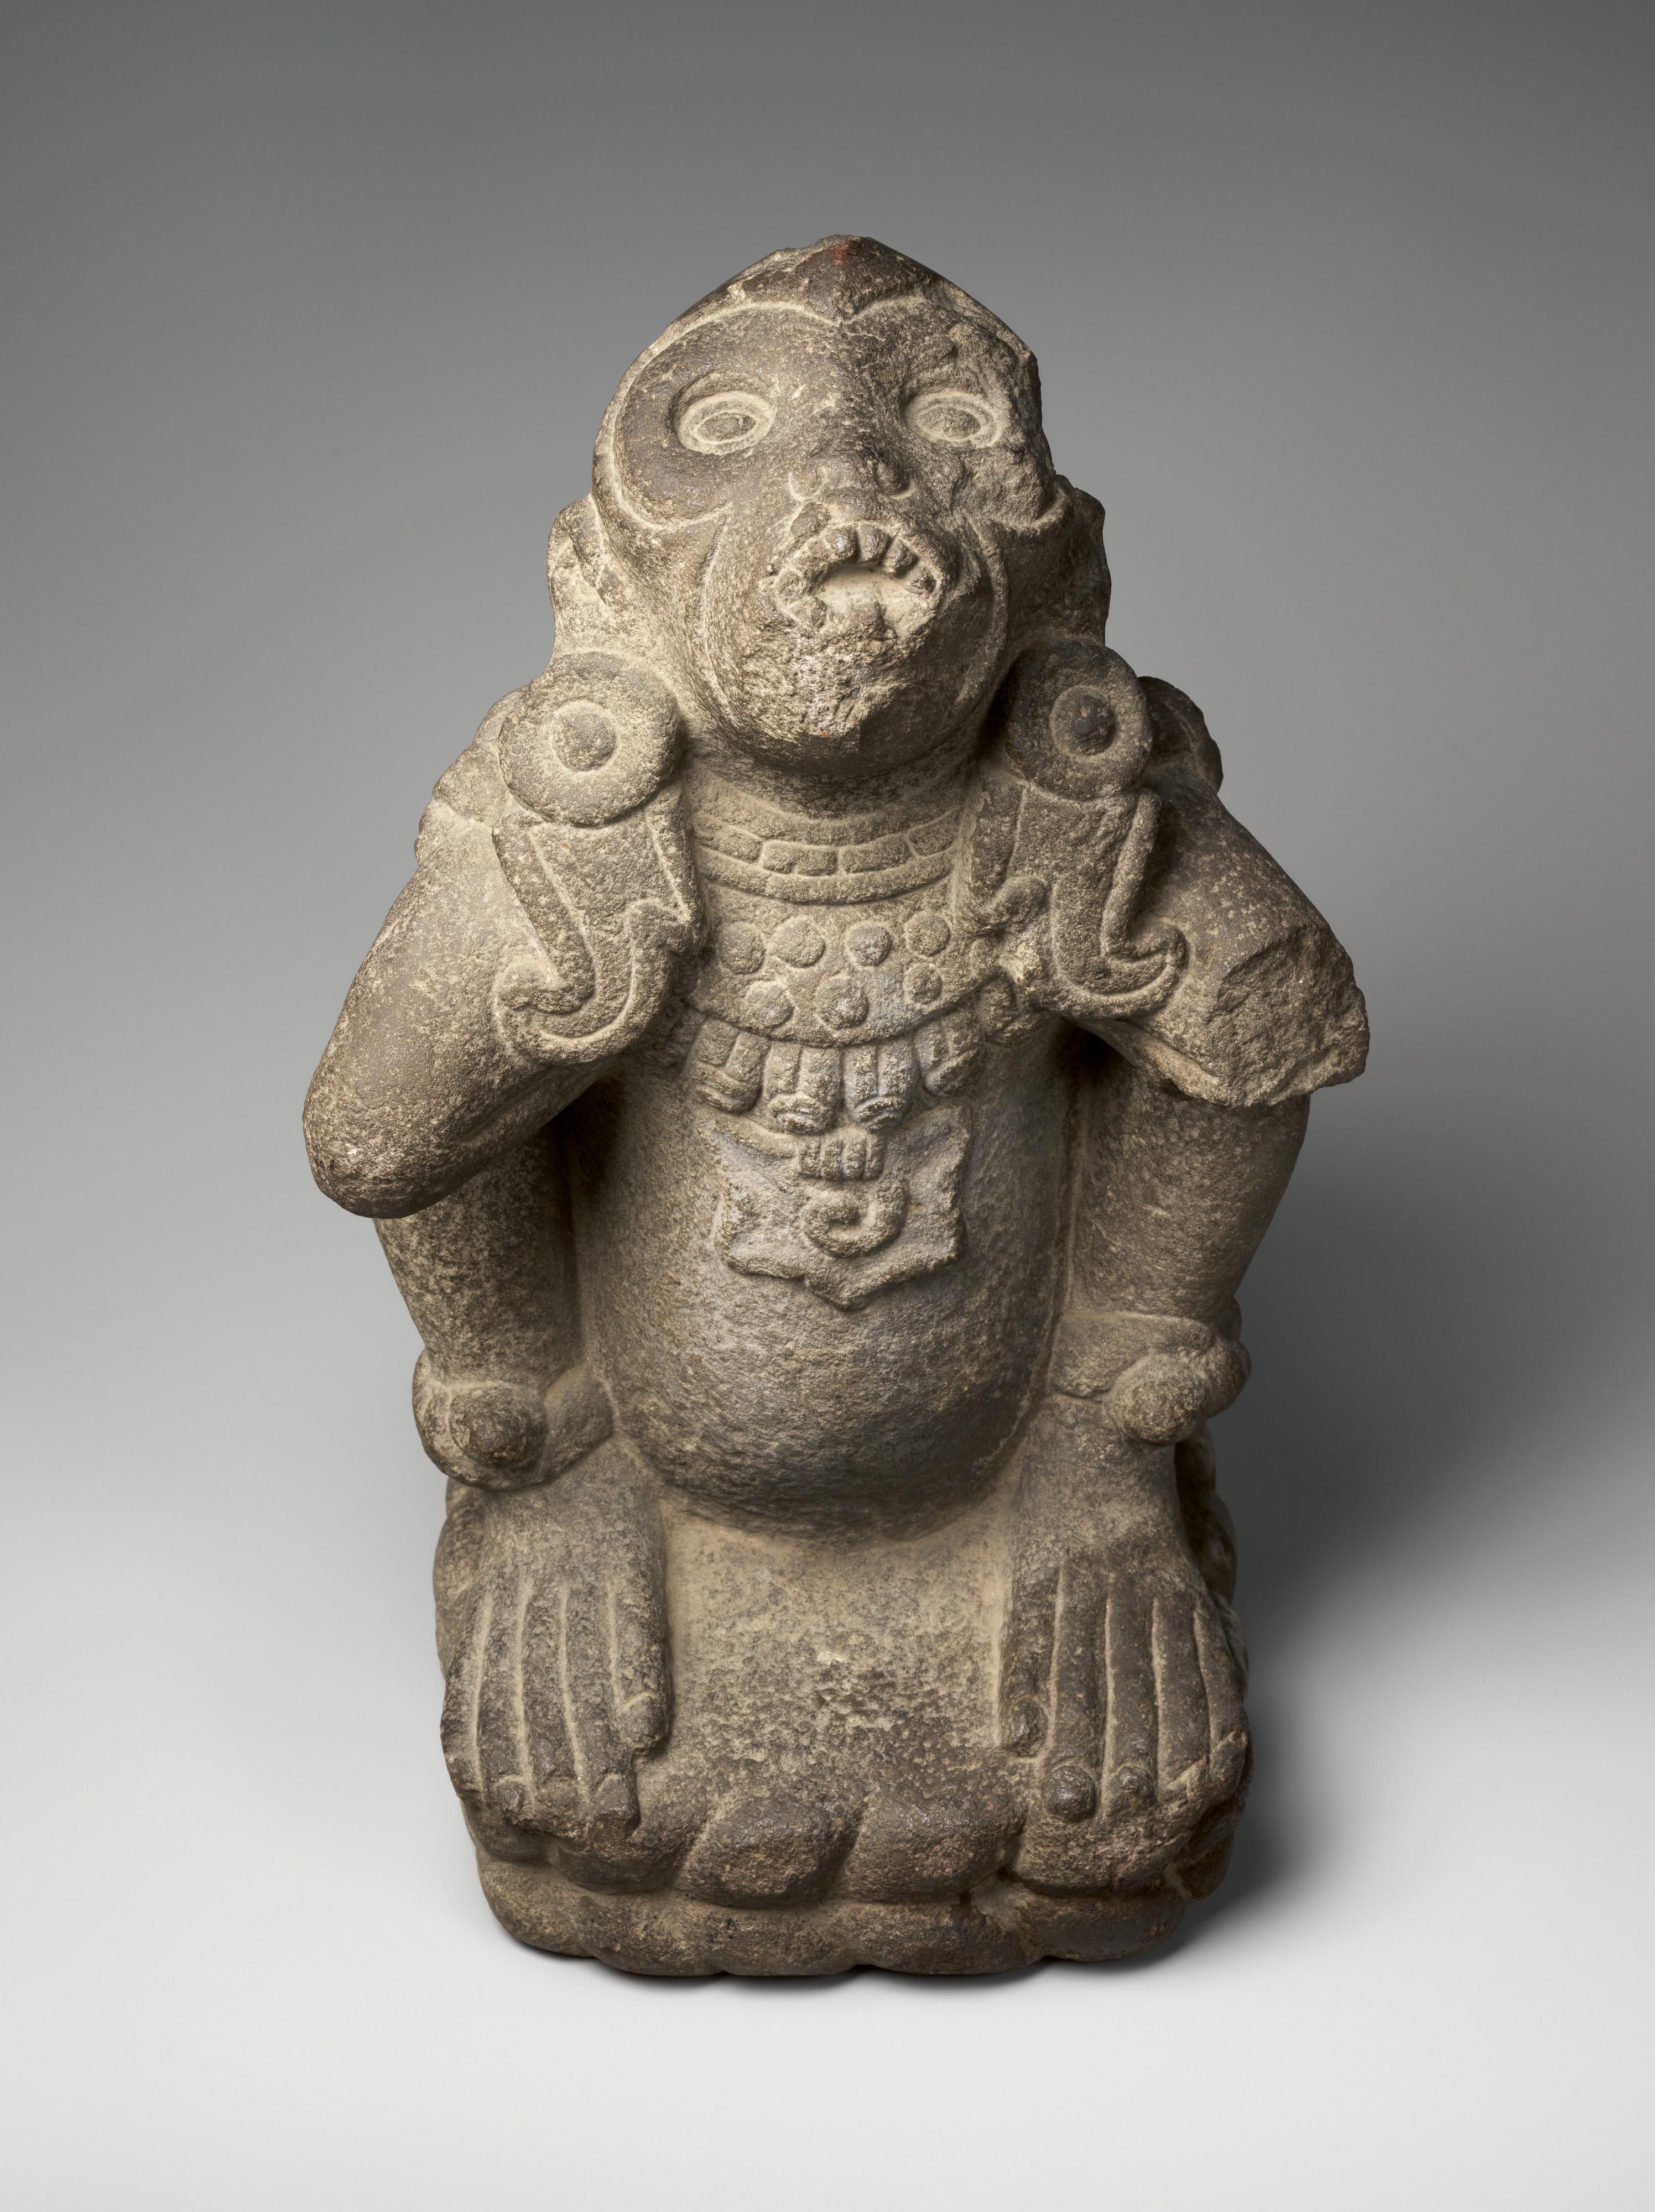 Stone Aztec Sculpture of a Spider Monkey with Pre-1970 UNESCO-Compliant Provenance For Sale